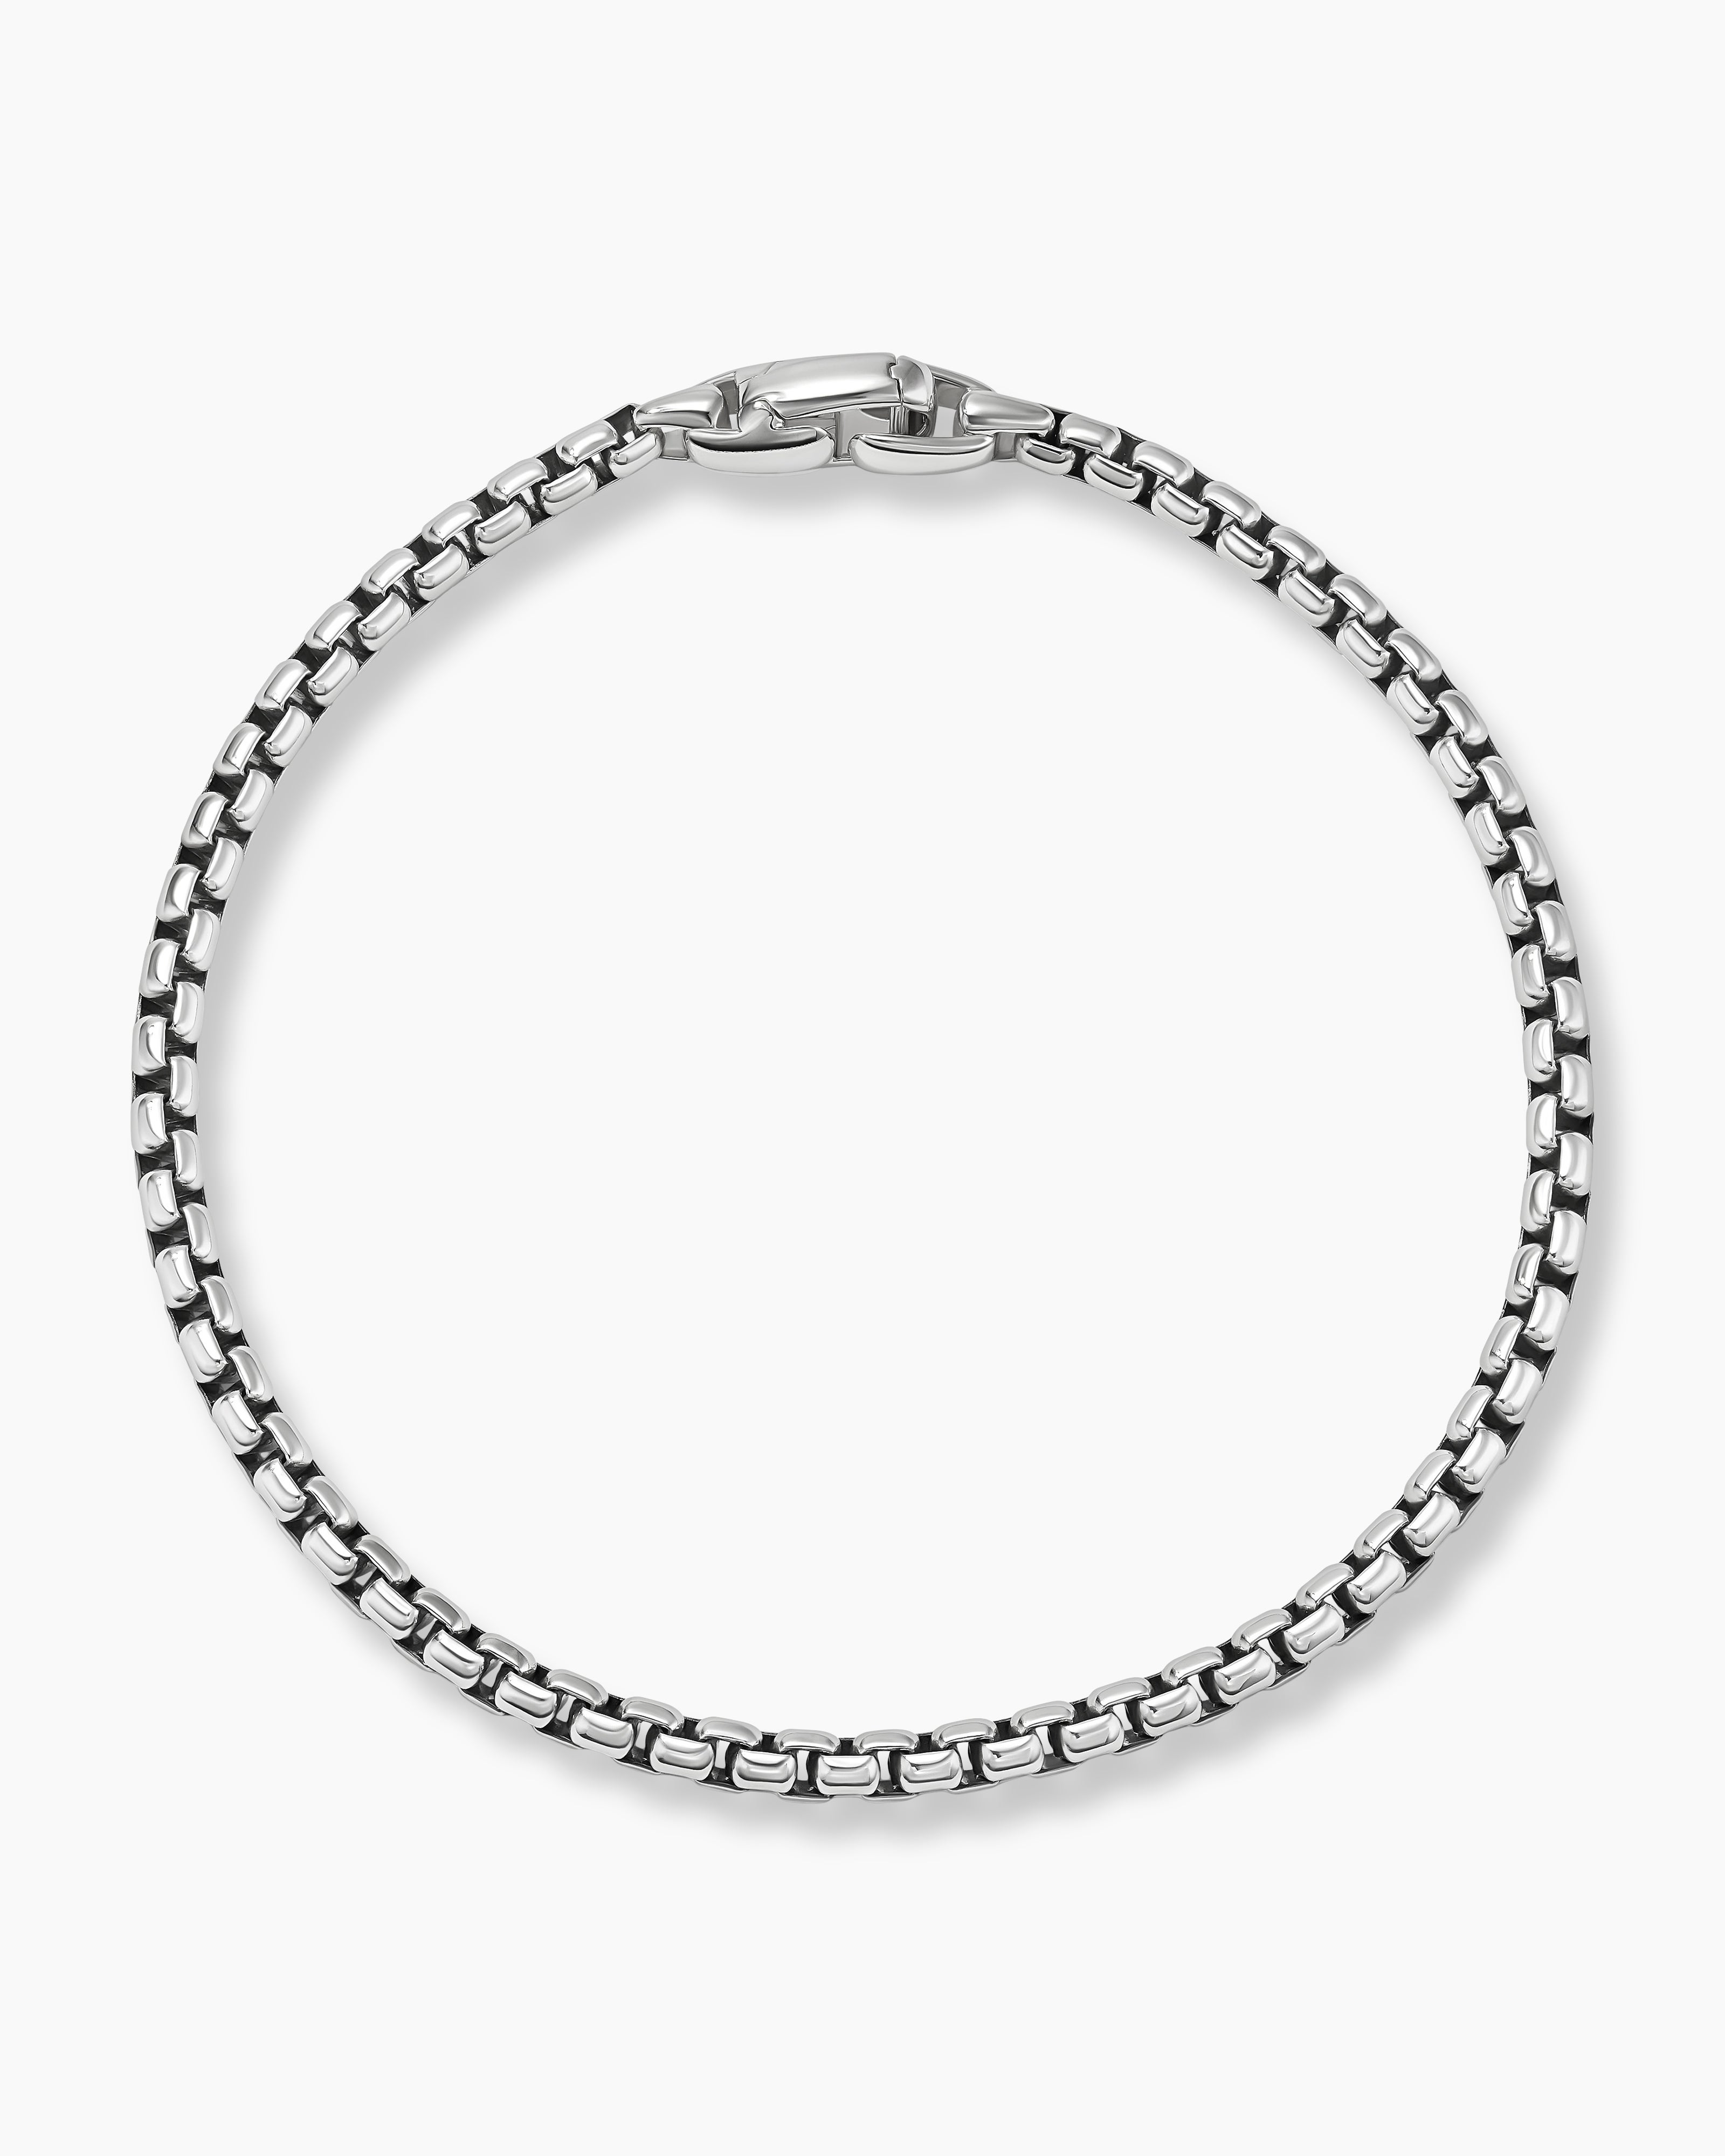 David Yurman Box Chain Sterling Silver Bracelet - Size Medium